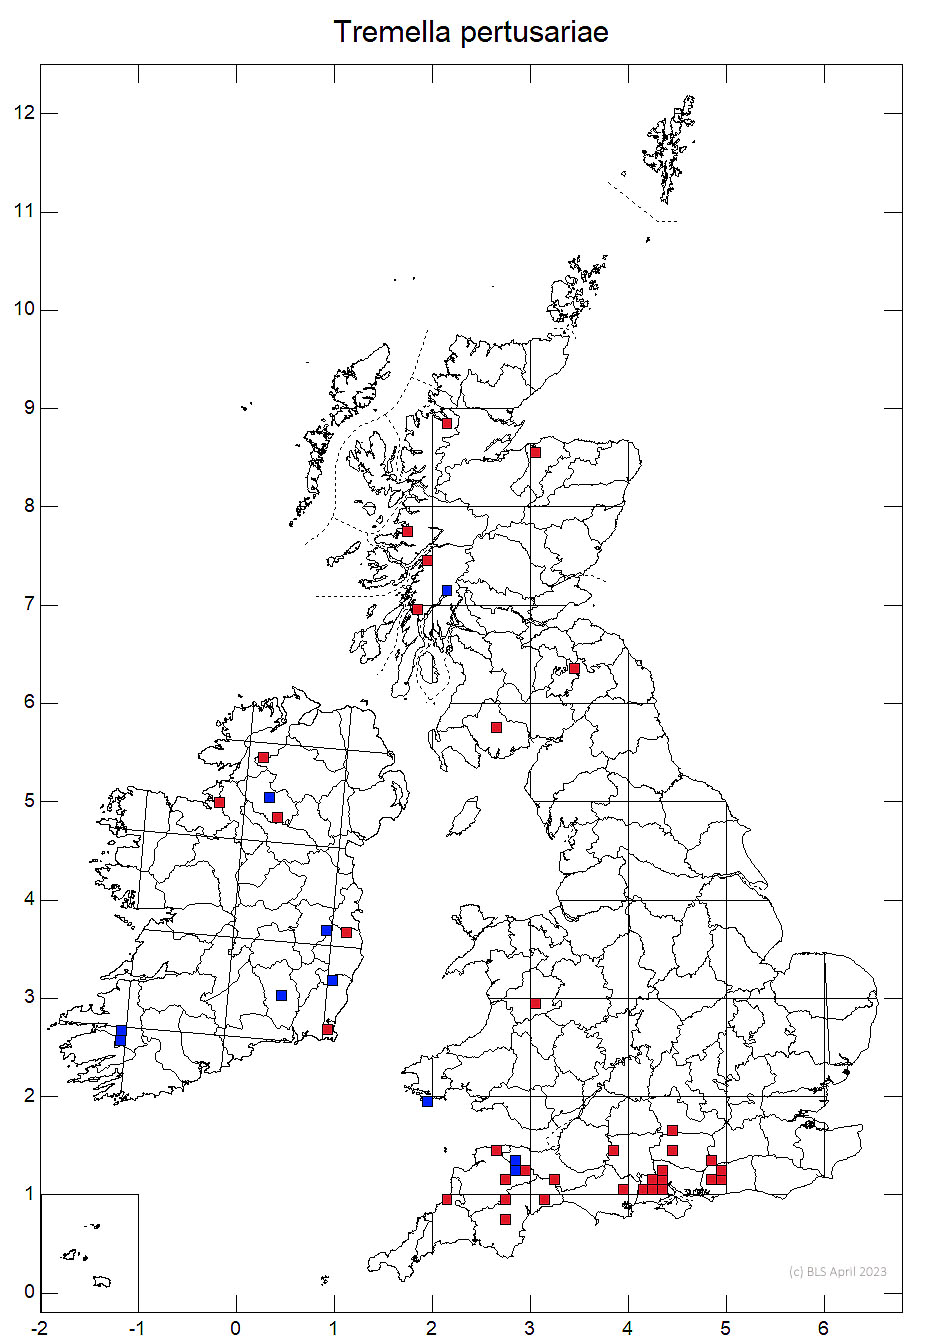 Tremella pertusariae 10km sq distribution map